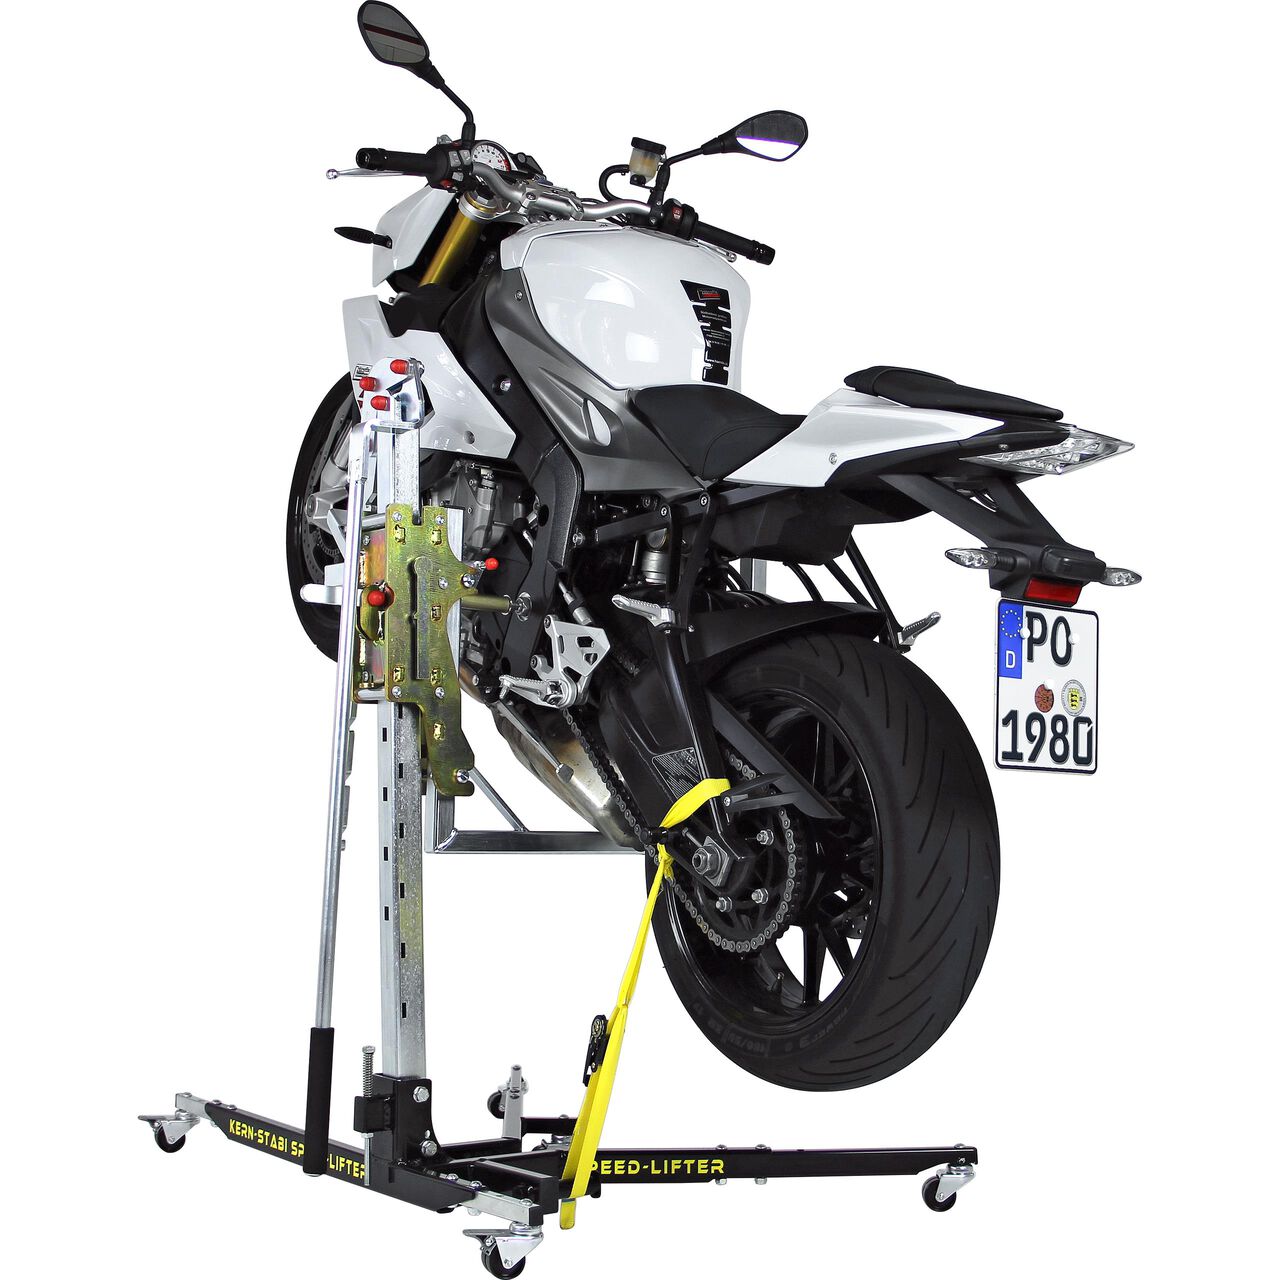 Kern-Stabi Konus-Adapter 3012 universal für Speed-Lifter Grau kaufen - POLO  Motorrad